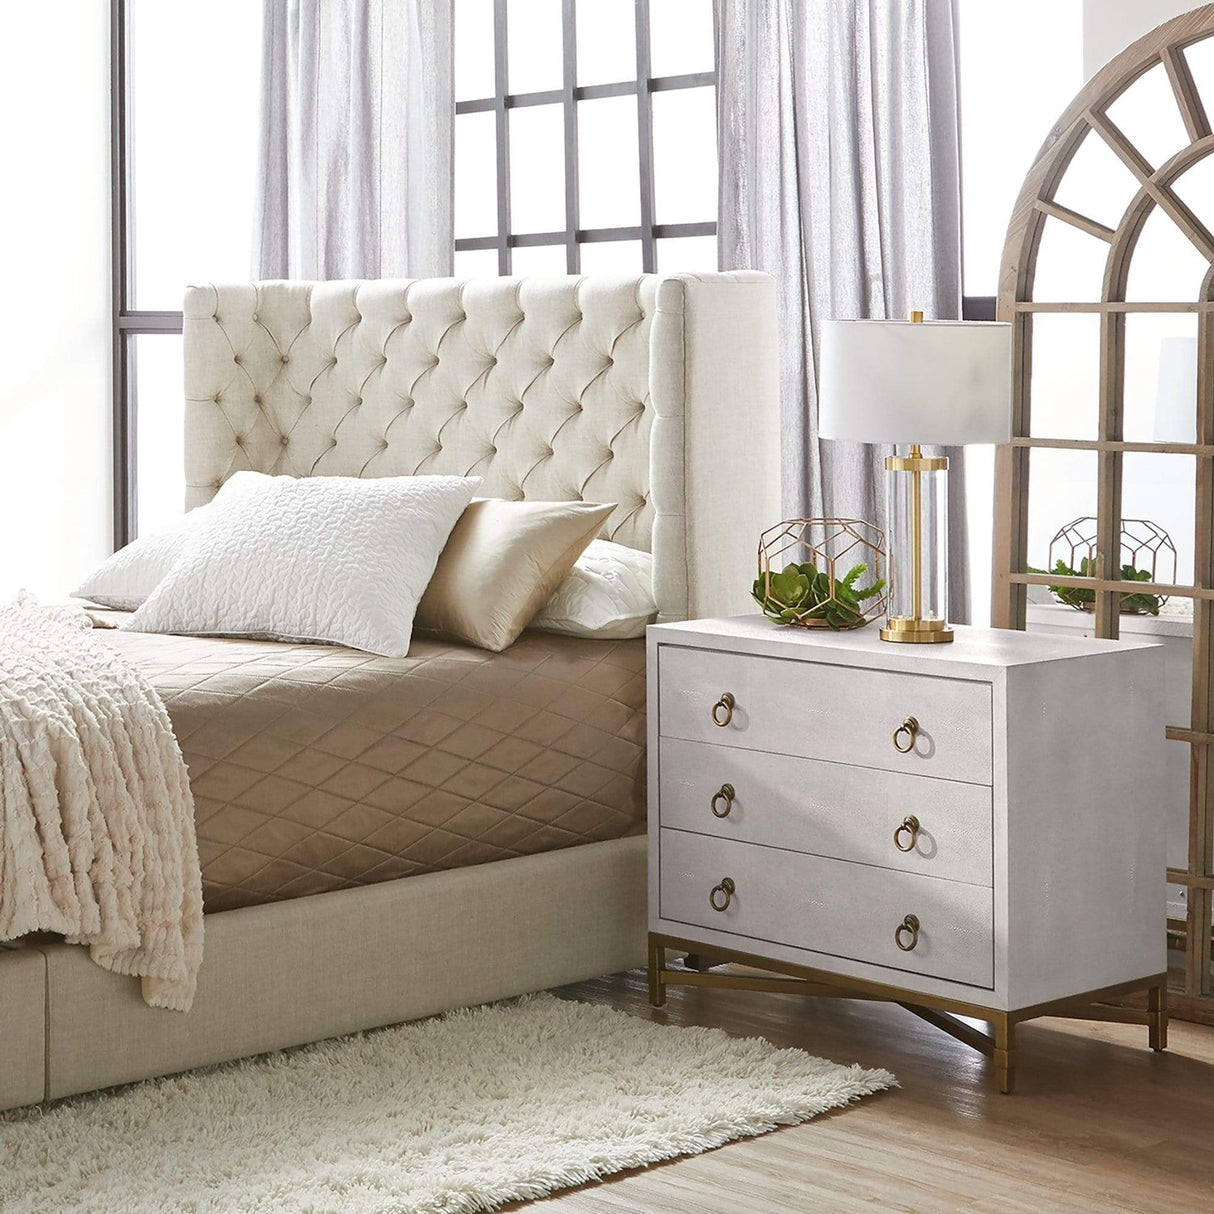 BLU Home Strand Shagreen 3-Drawer Nightstand - White Furniture orient-express-6120.WHT-SHG/GLD 00842279109509